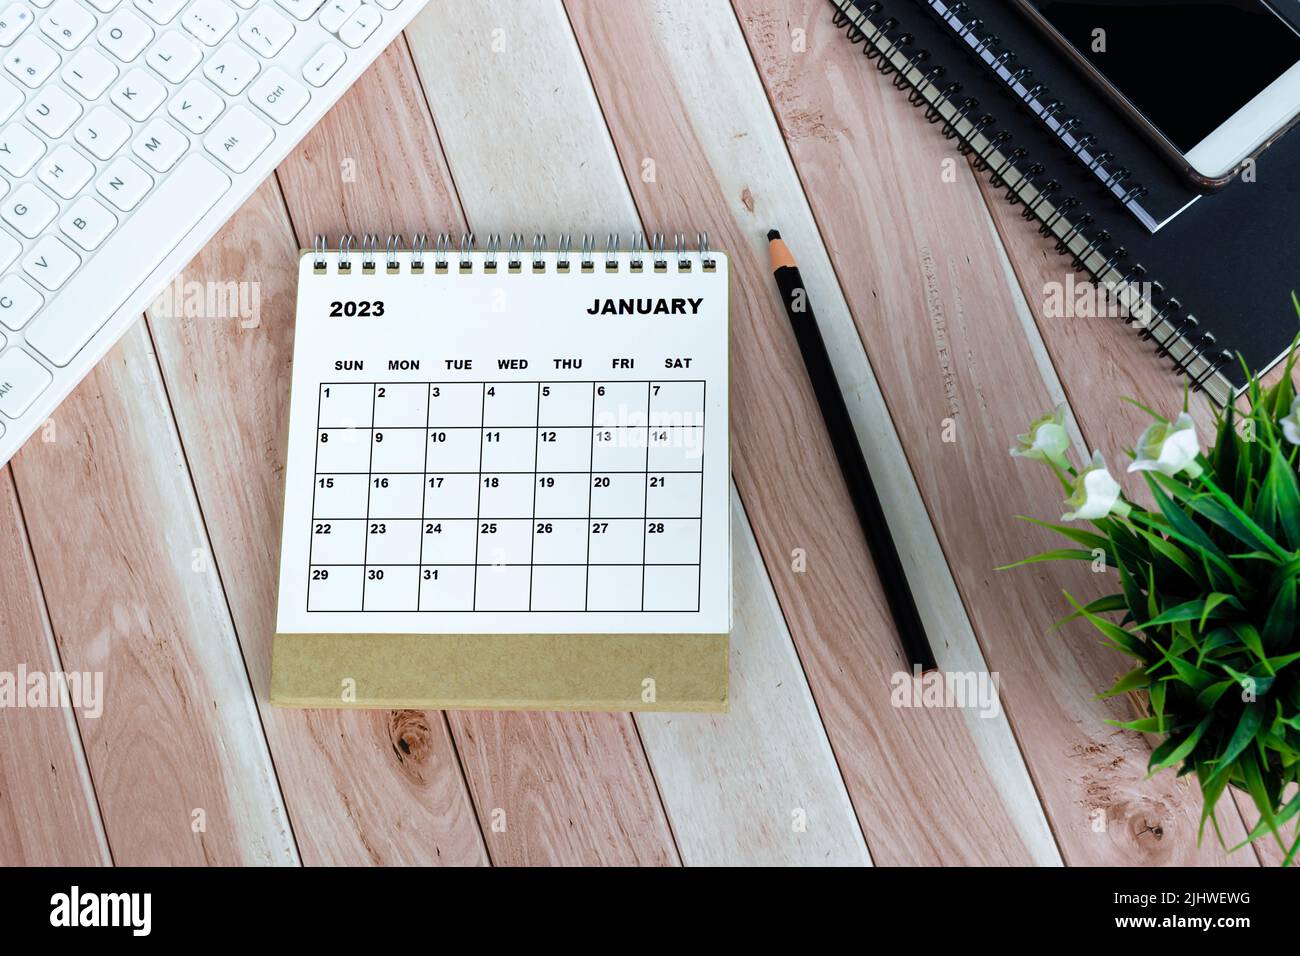 Free Download January 2023 Desktop Calendar  Composure Graphics   Composure Graphics